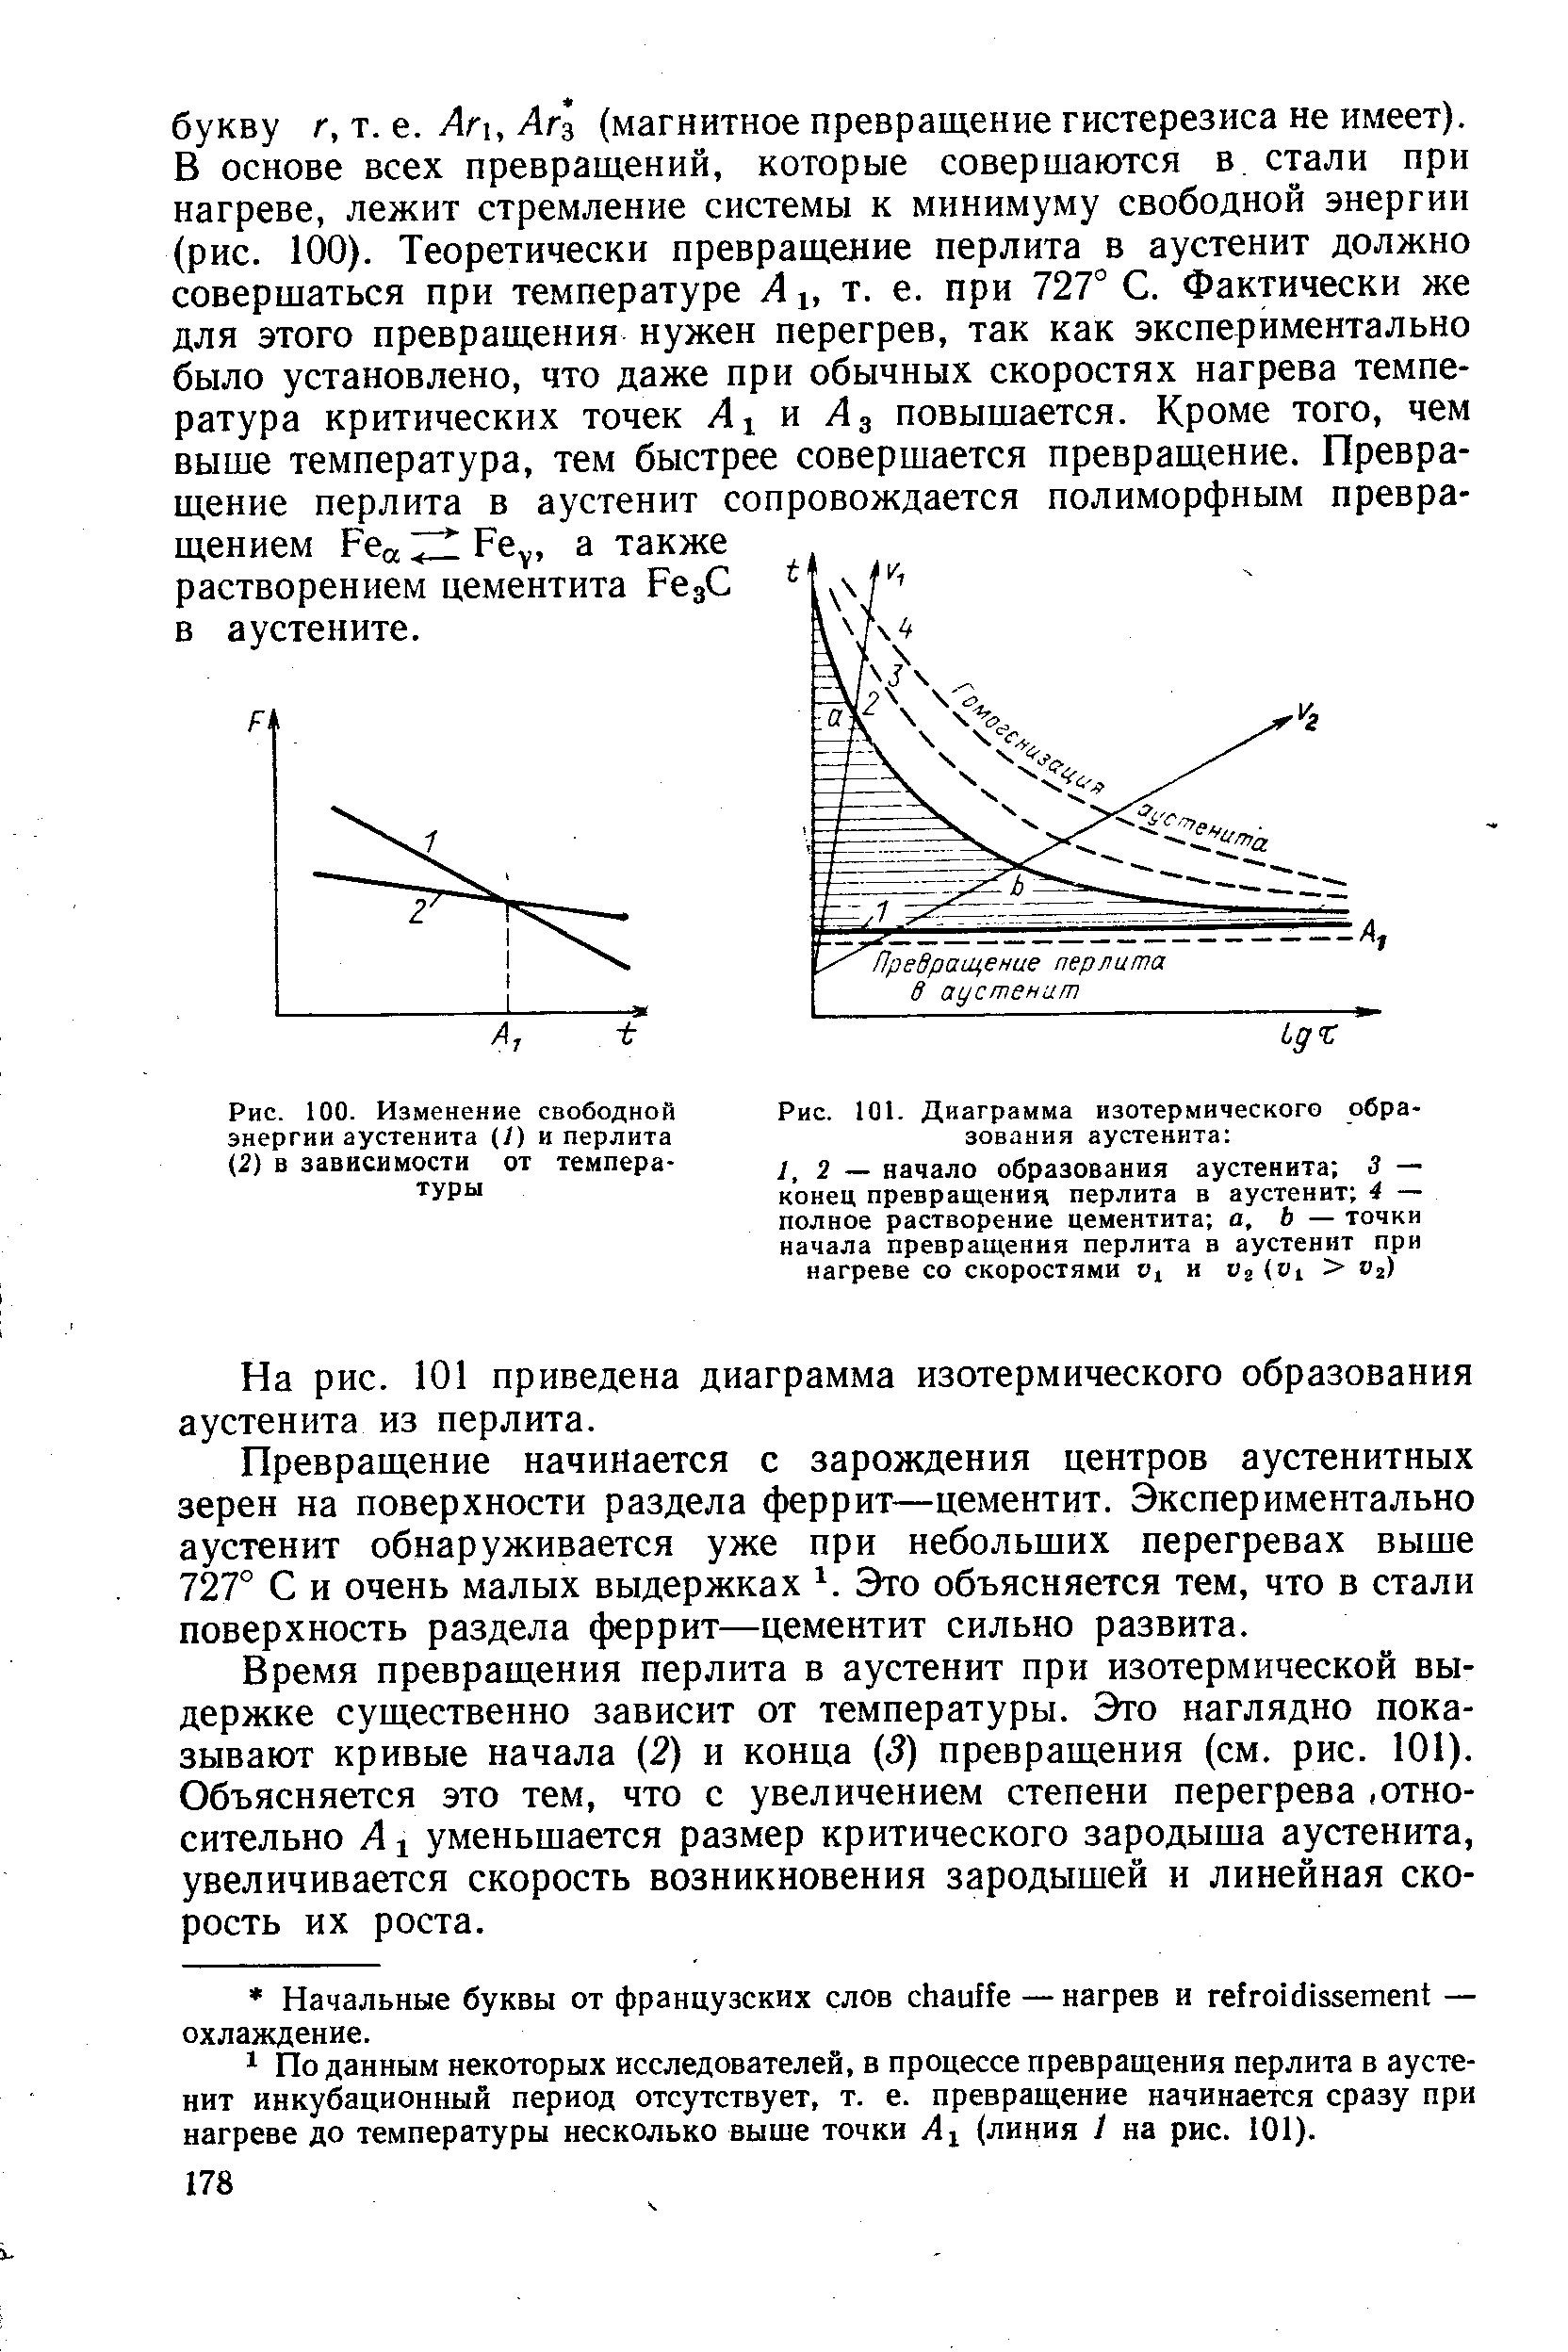 На рис. 101 приведена диаграмма изотермического образования аустенита из перлита.
